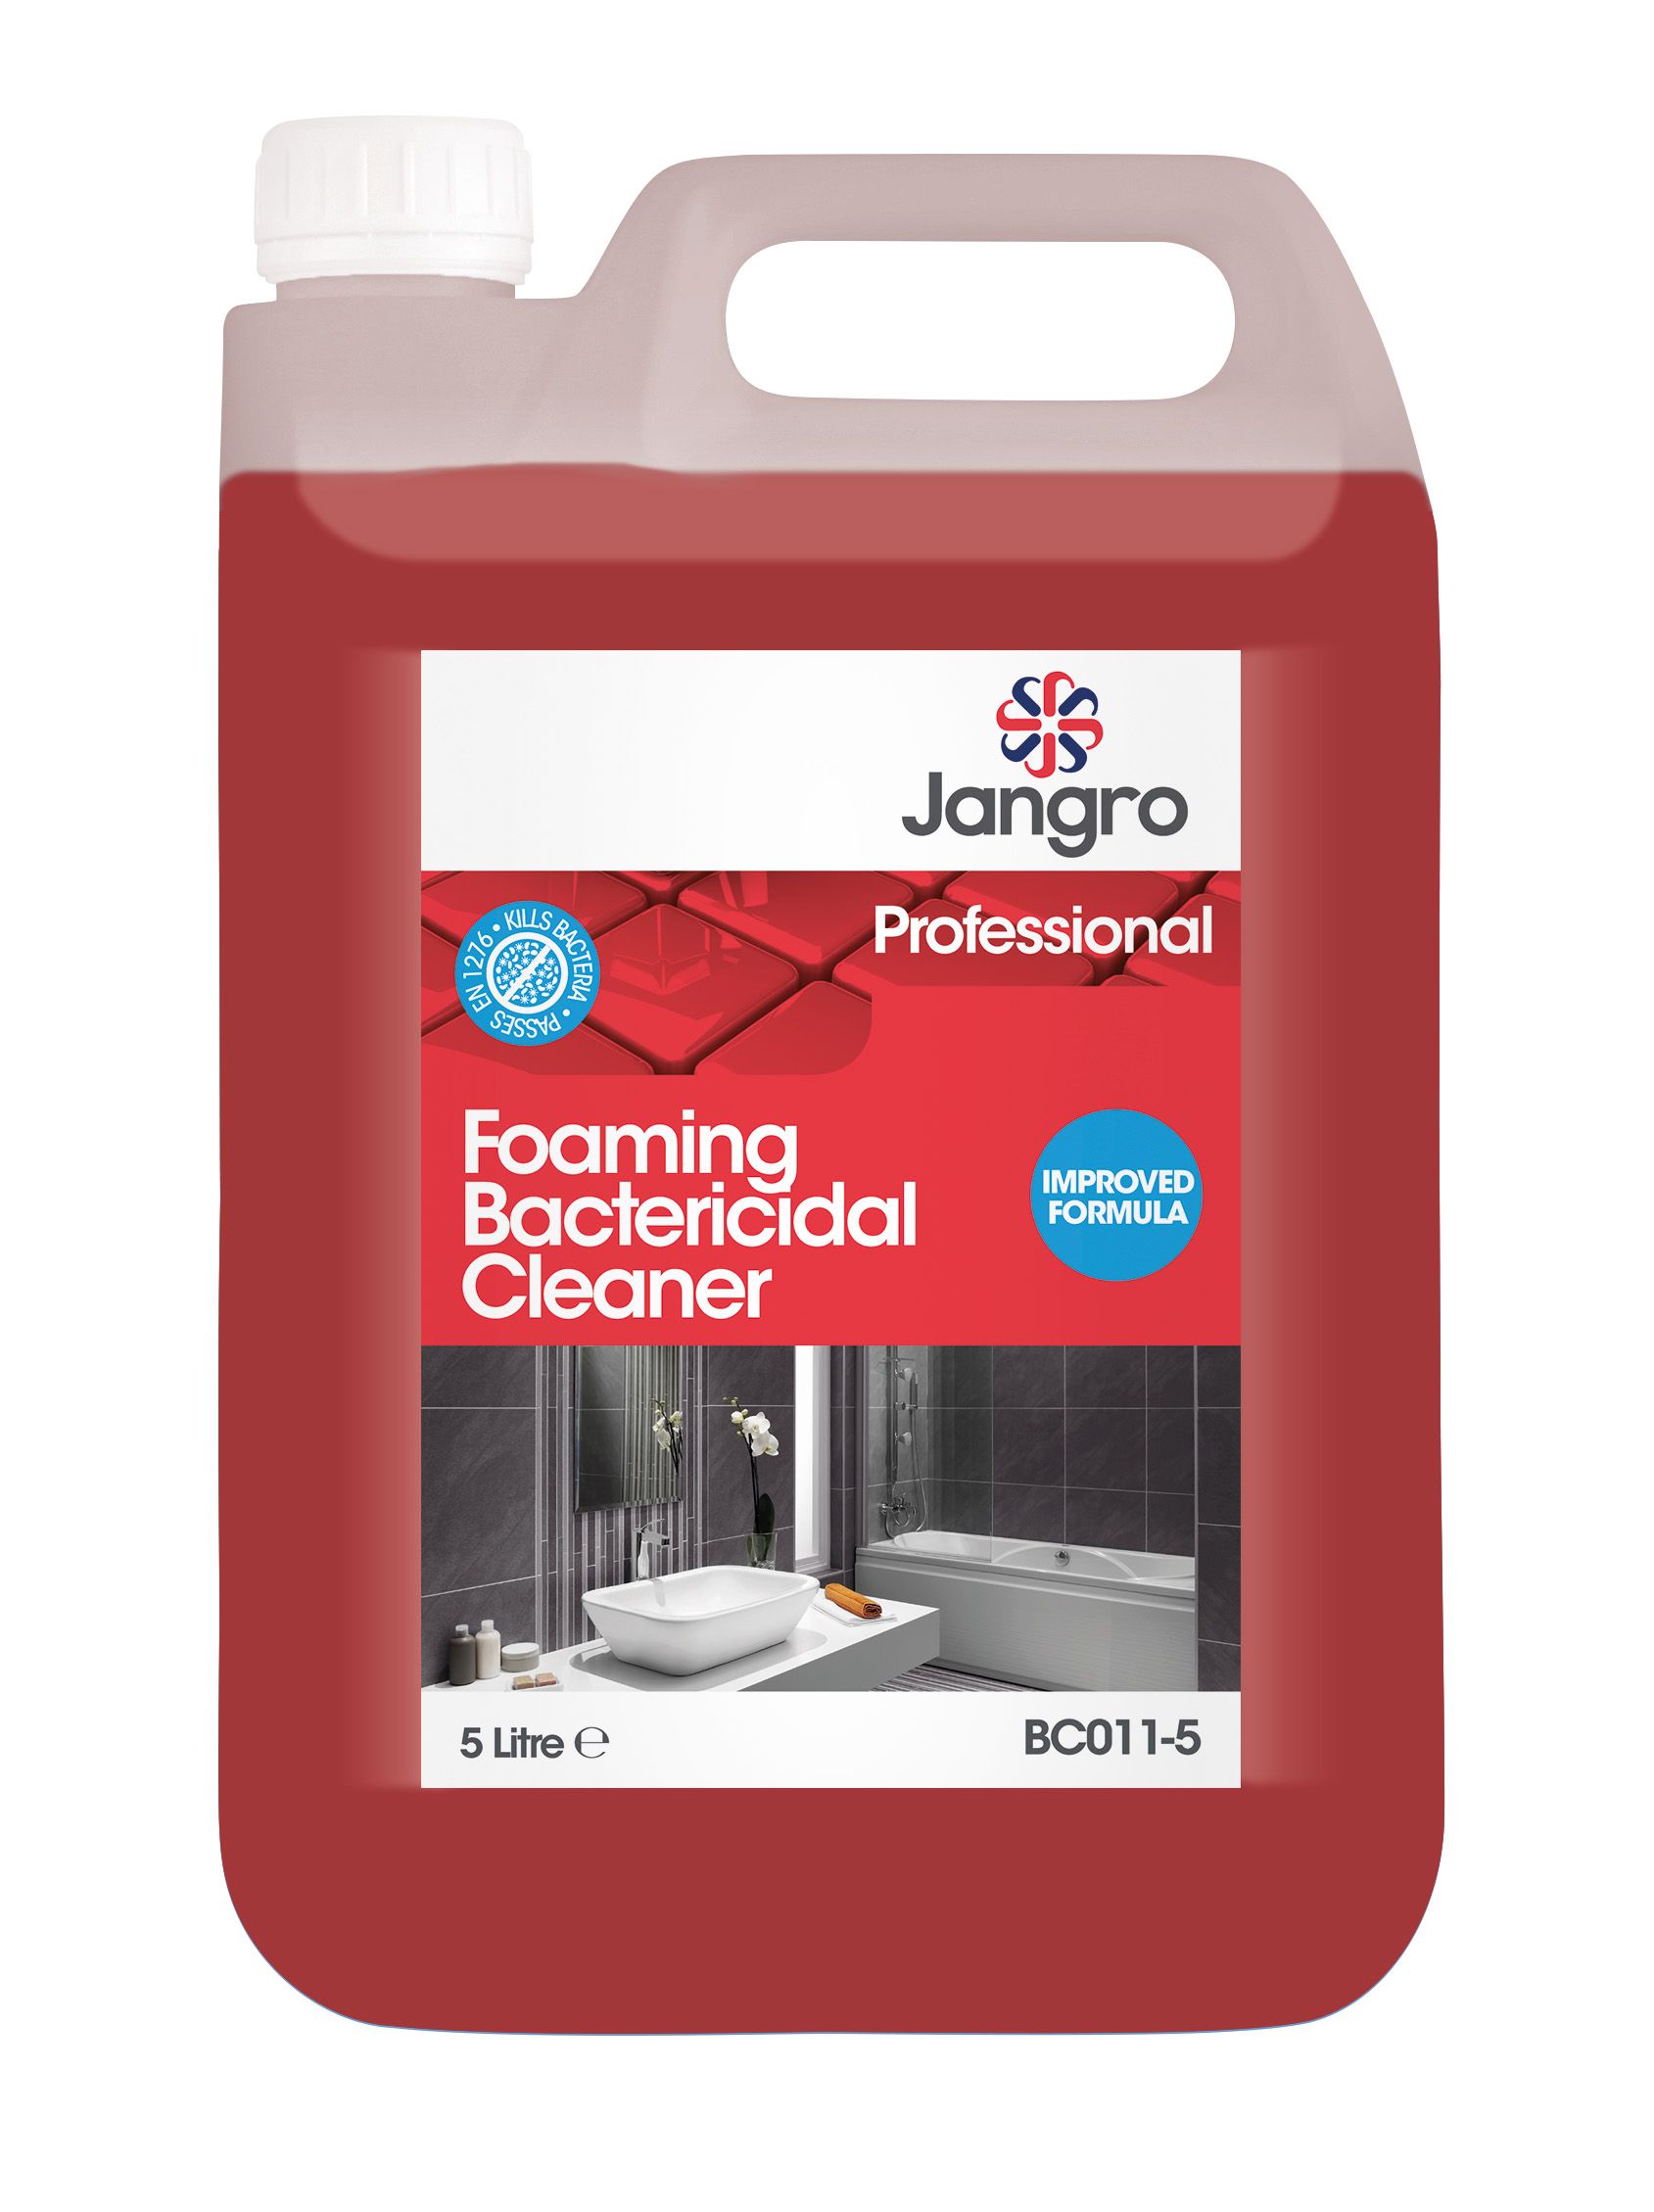 Jangro Professional Foaming Bactericidal Cleaner 5 Litre